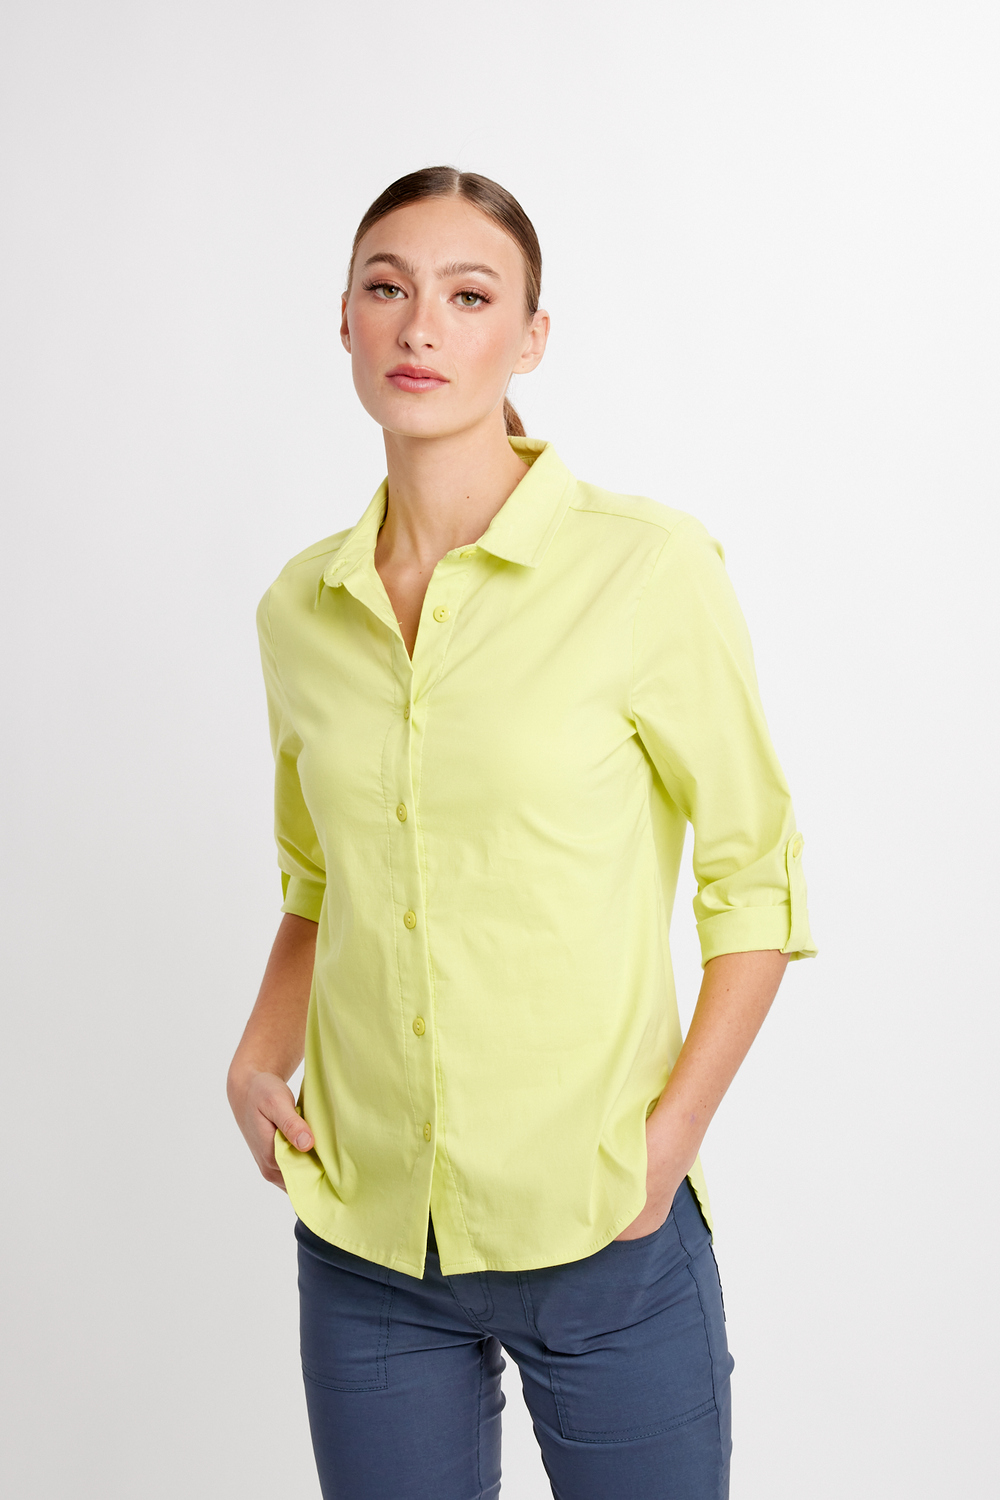 Minimalist Polo Business Shirt Style 24222. Citrus